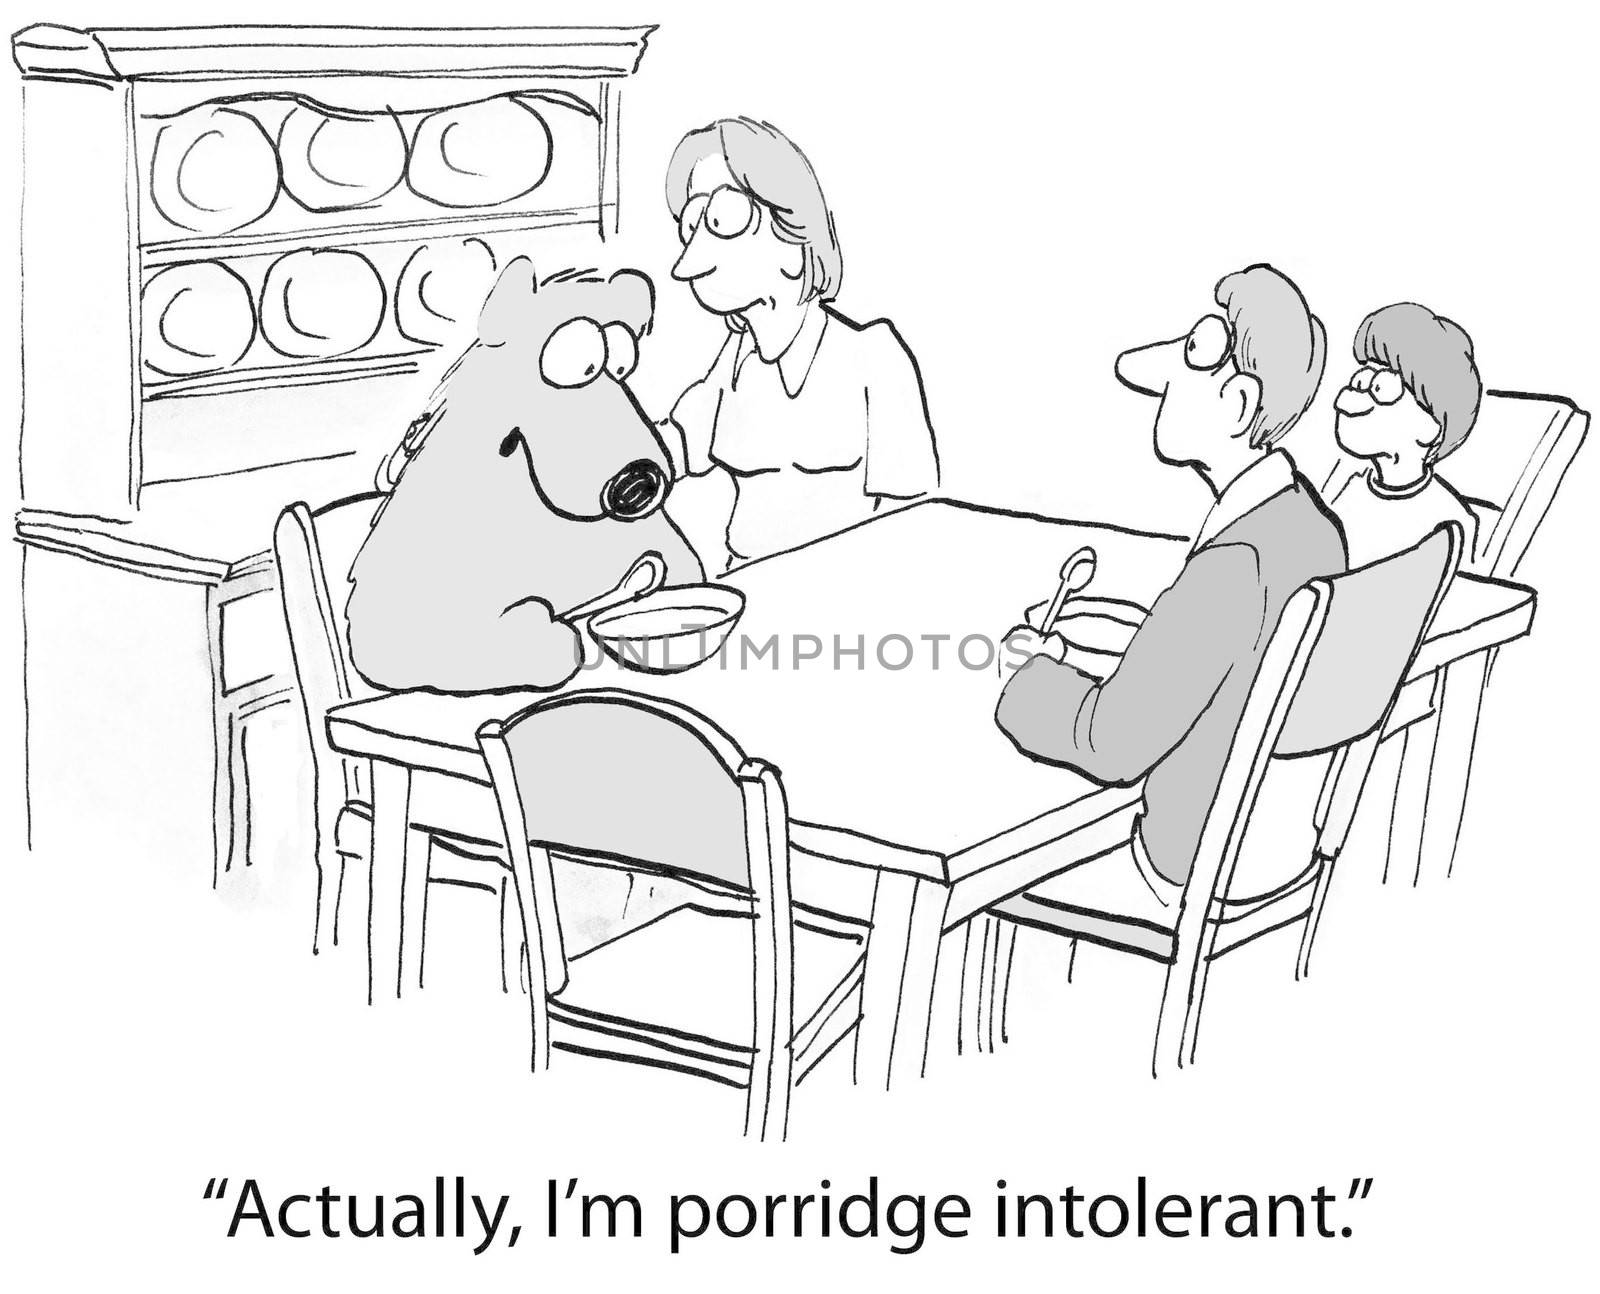 "Actually, I'm porridge intolerant."